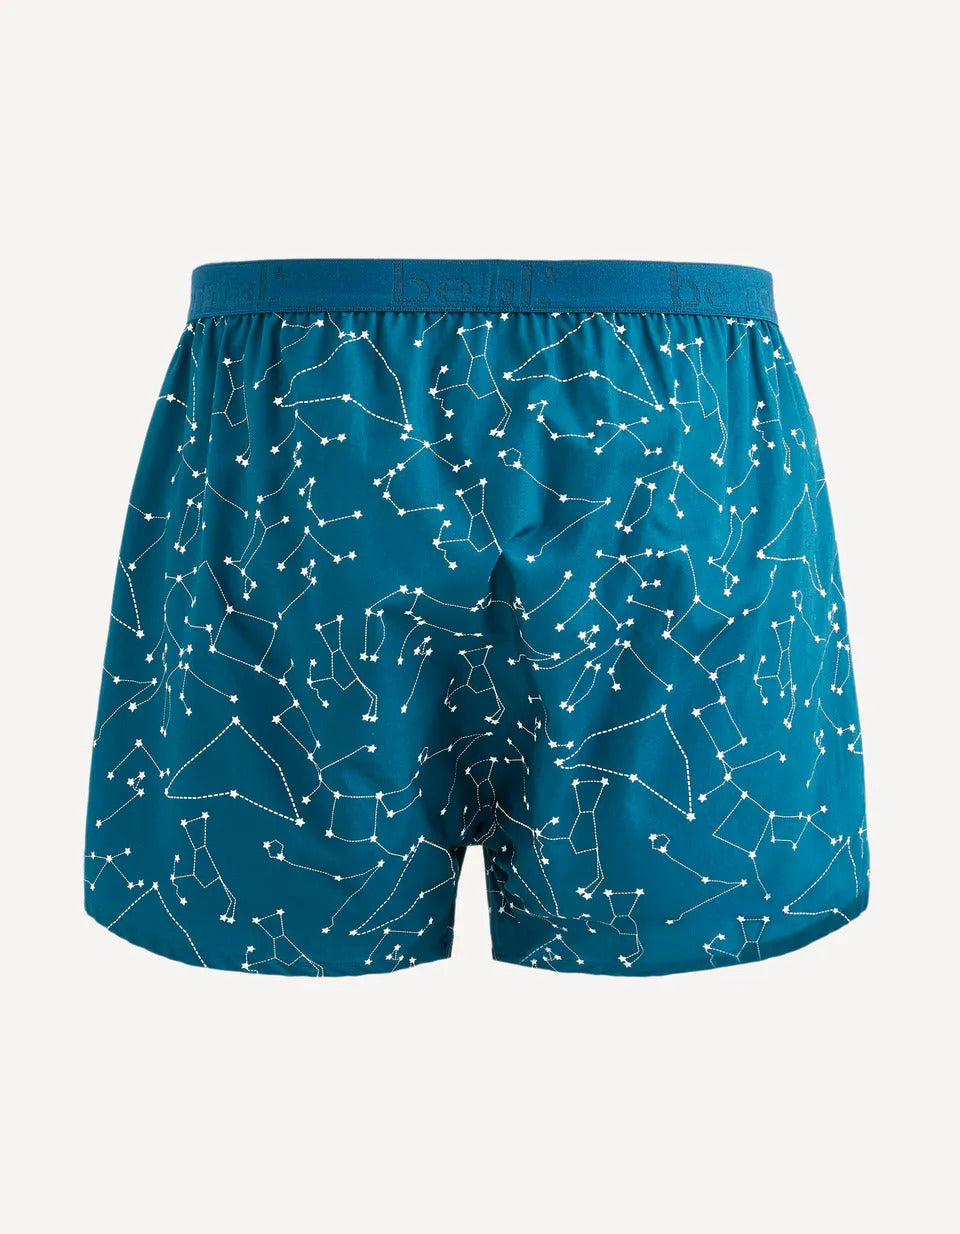 Constellation 100% Cotton Poplin Boxer Shorts - Petrol Blue - 02